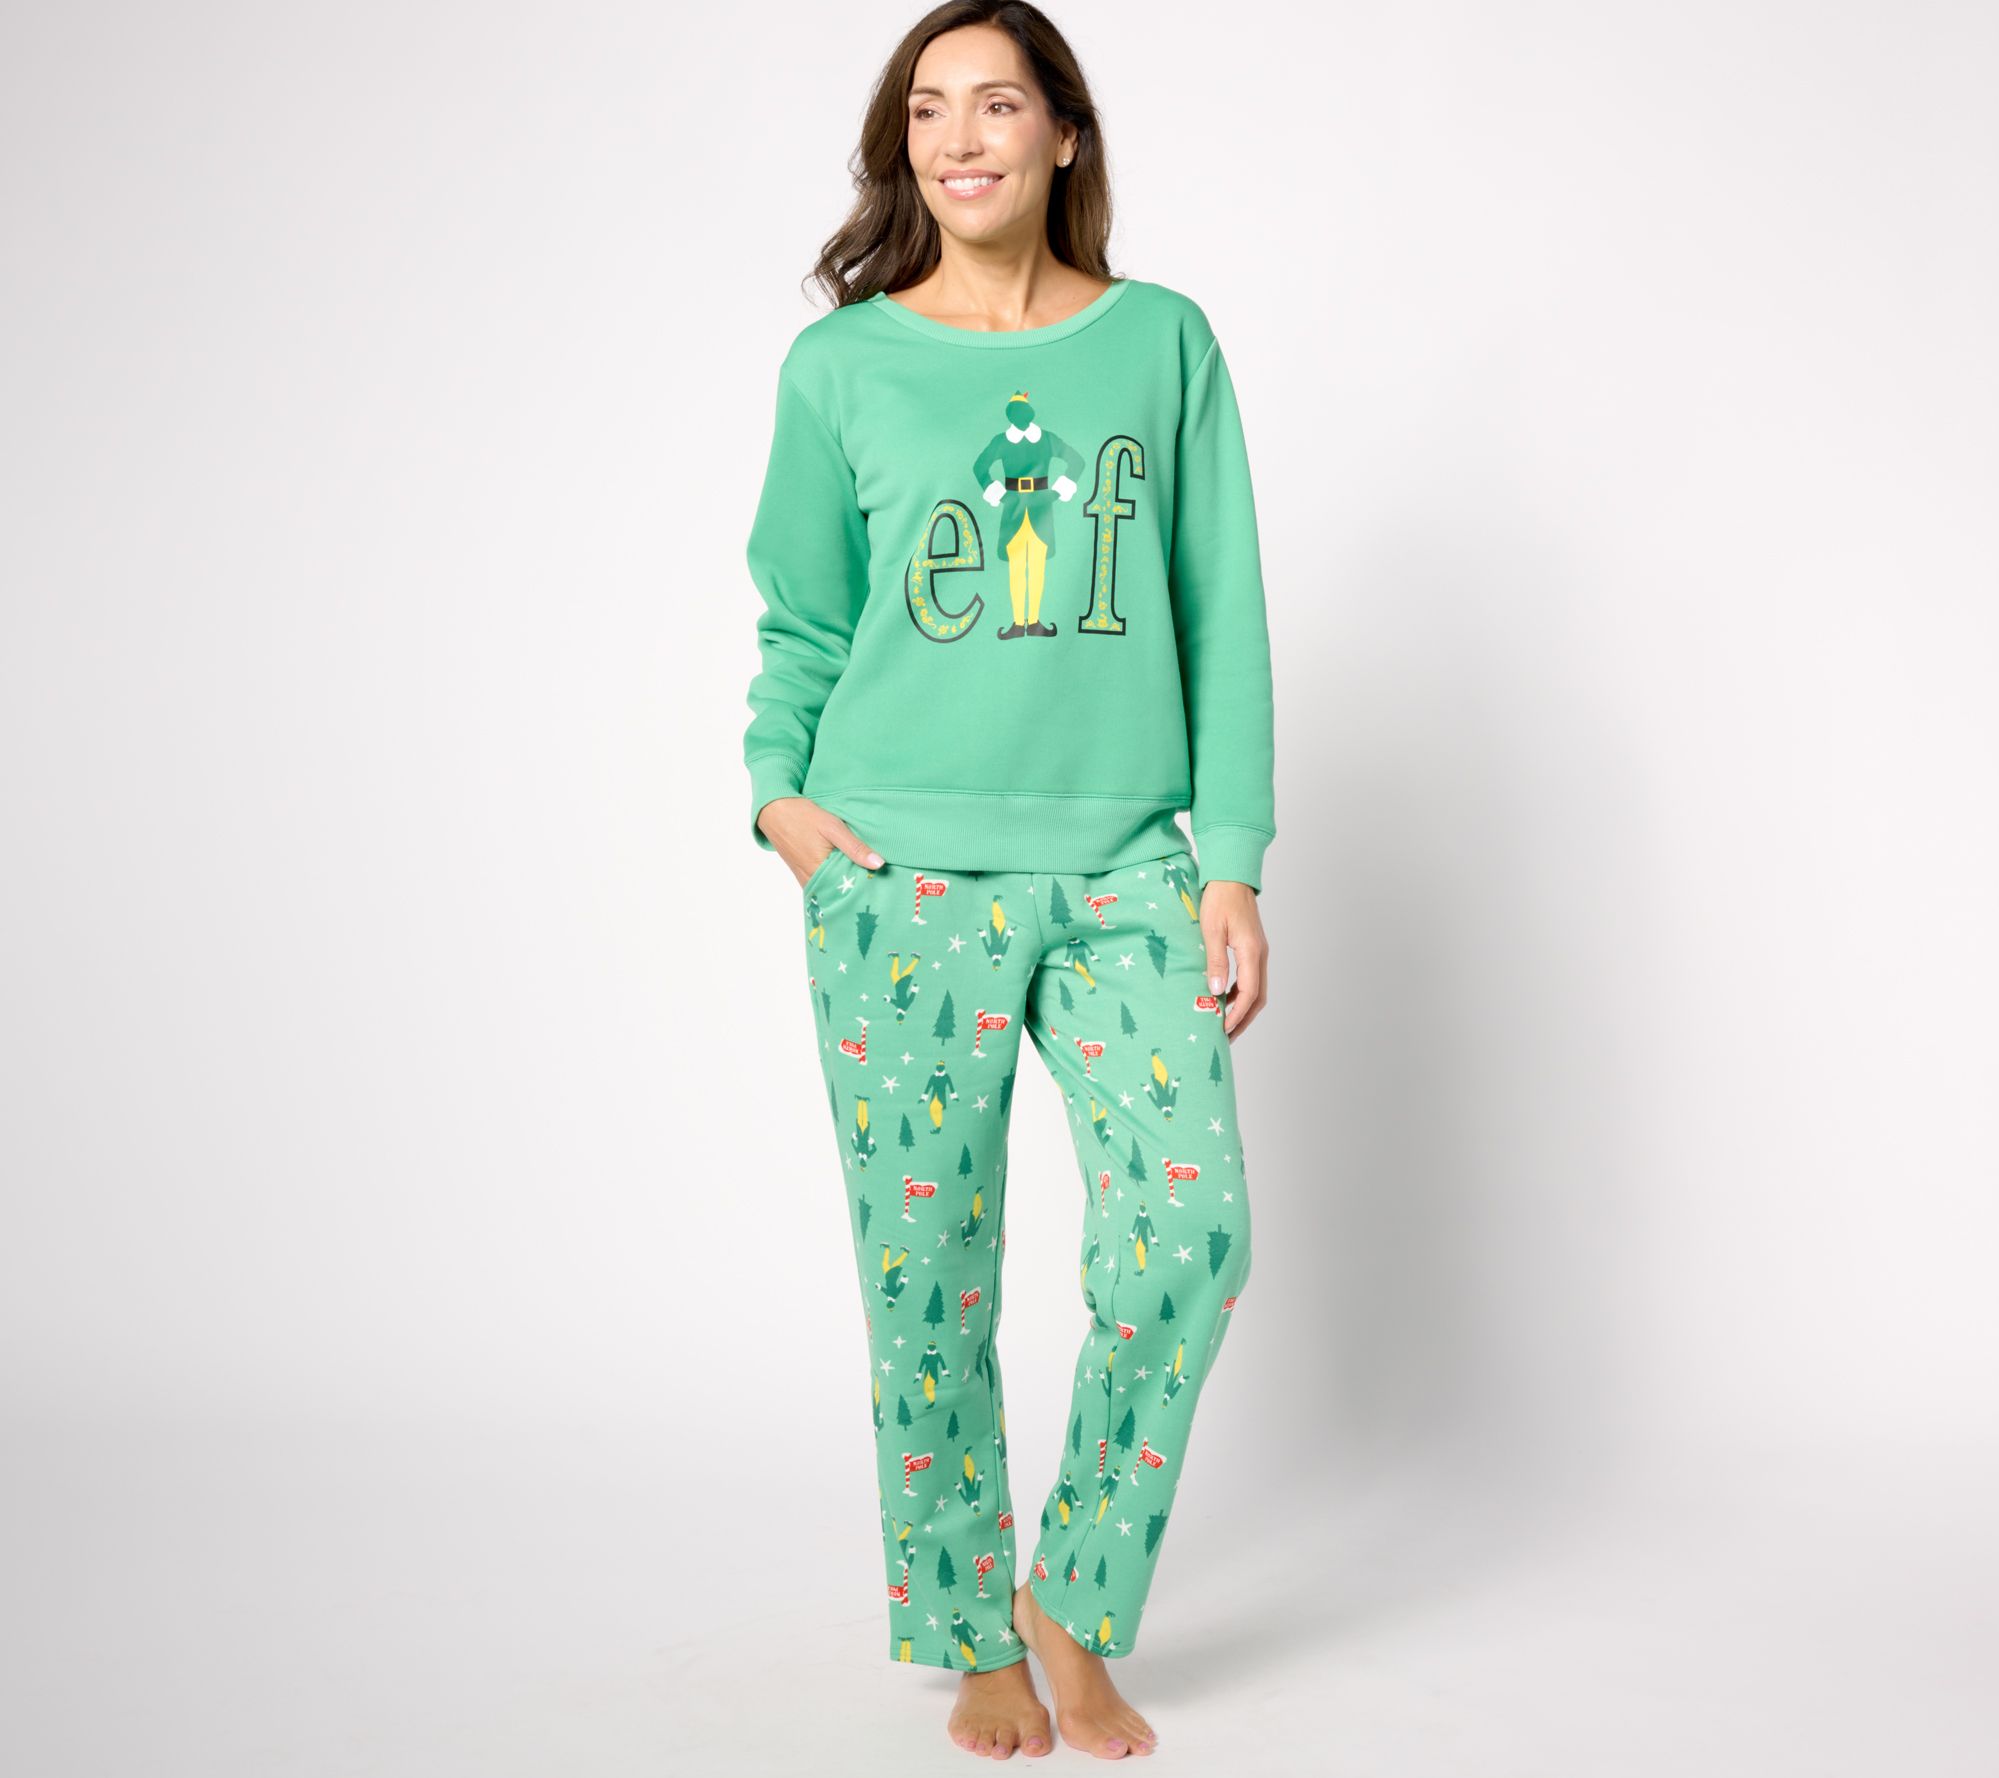 Women's Cuddl Duds® Pajamas: Essential Banded Bottom Sleep Pants